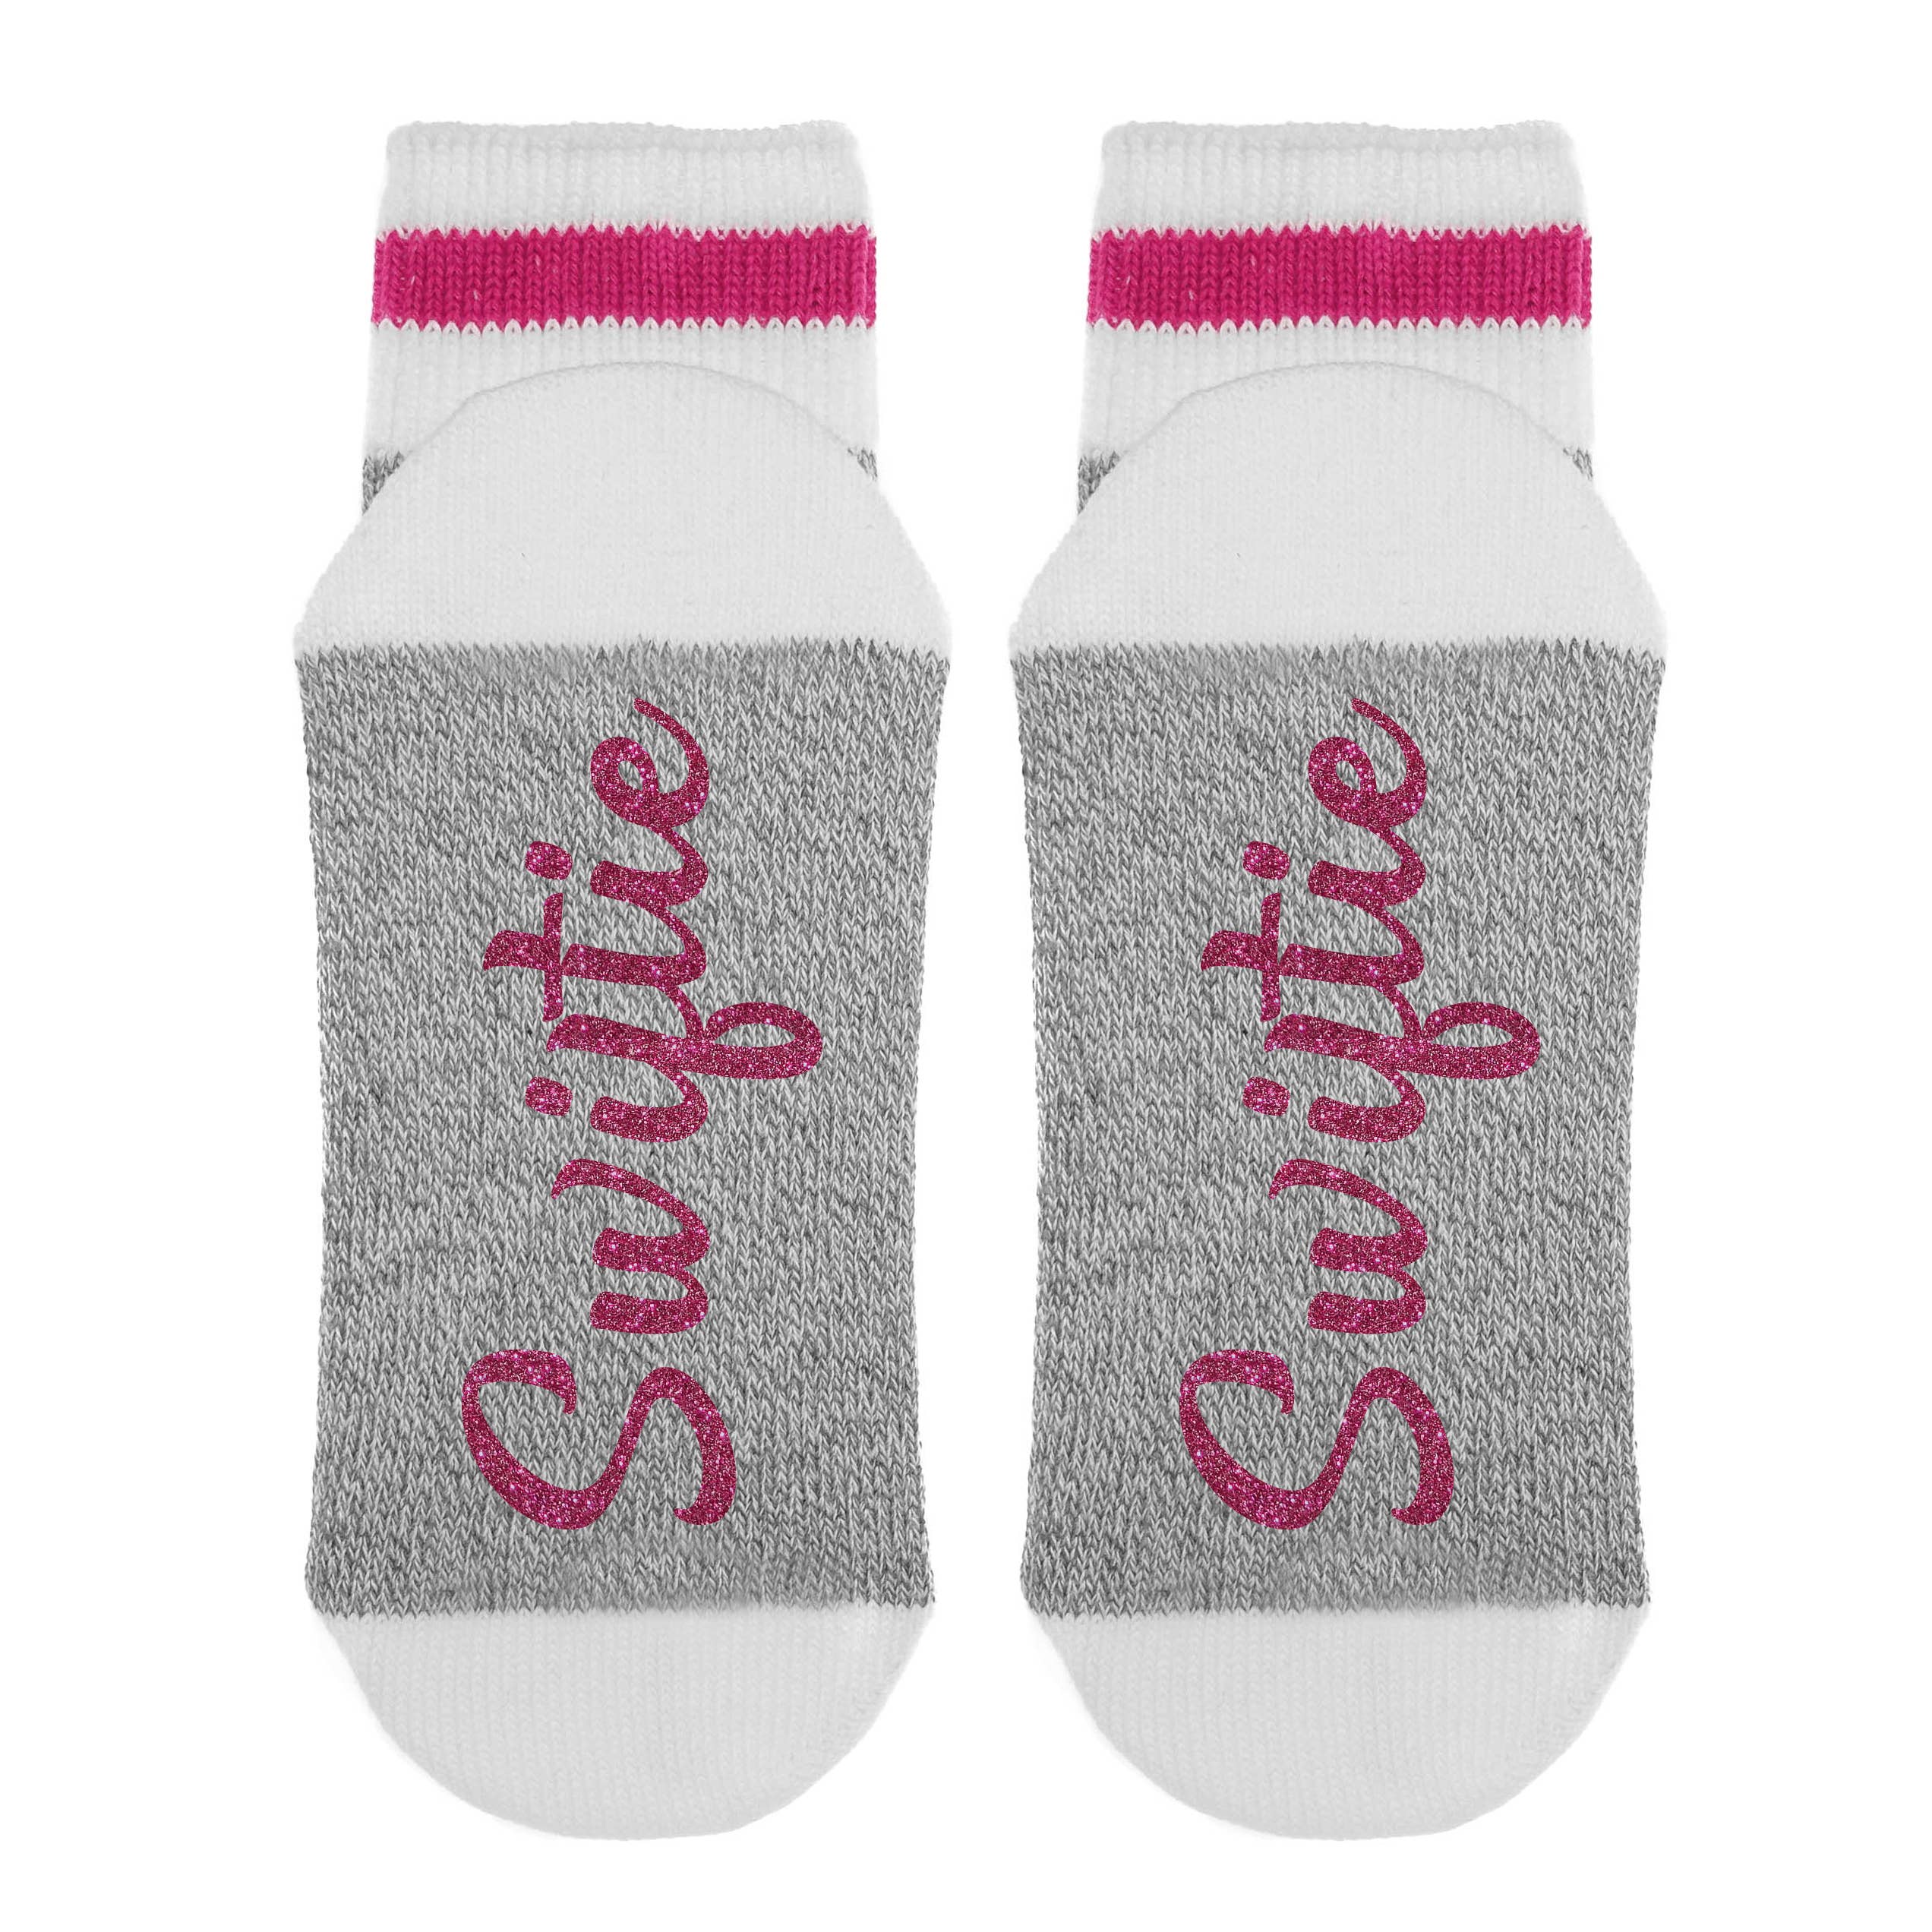 Purchase Wholesale taylor swift socks. Free Returns & Net 60 Terms